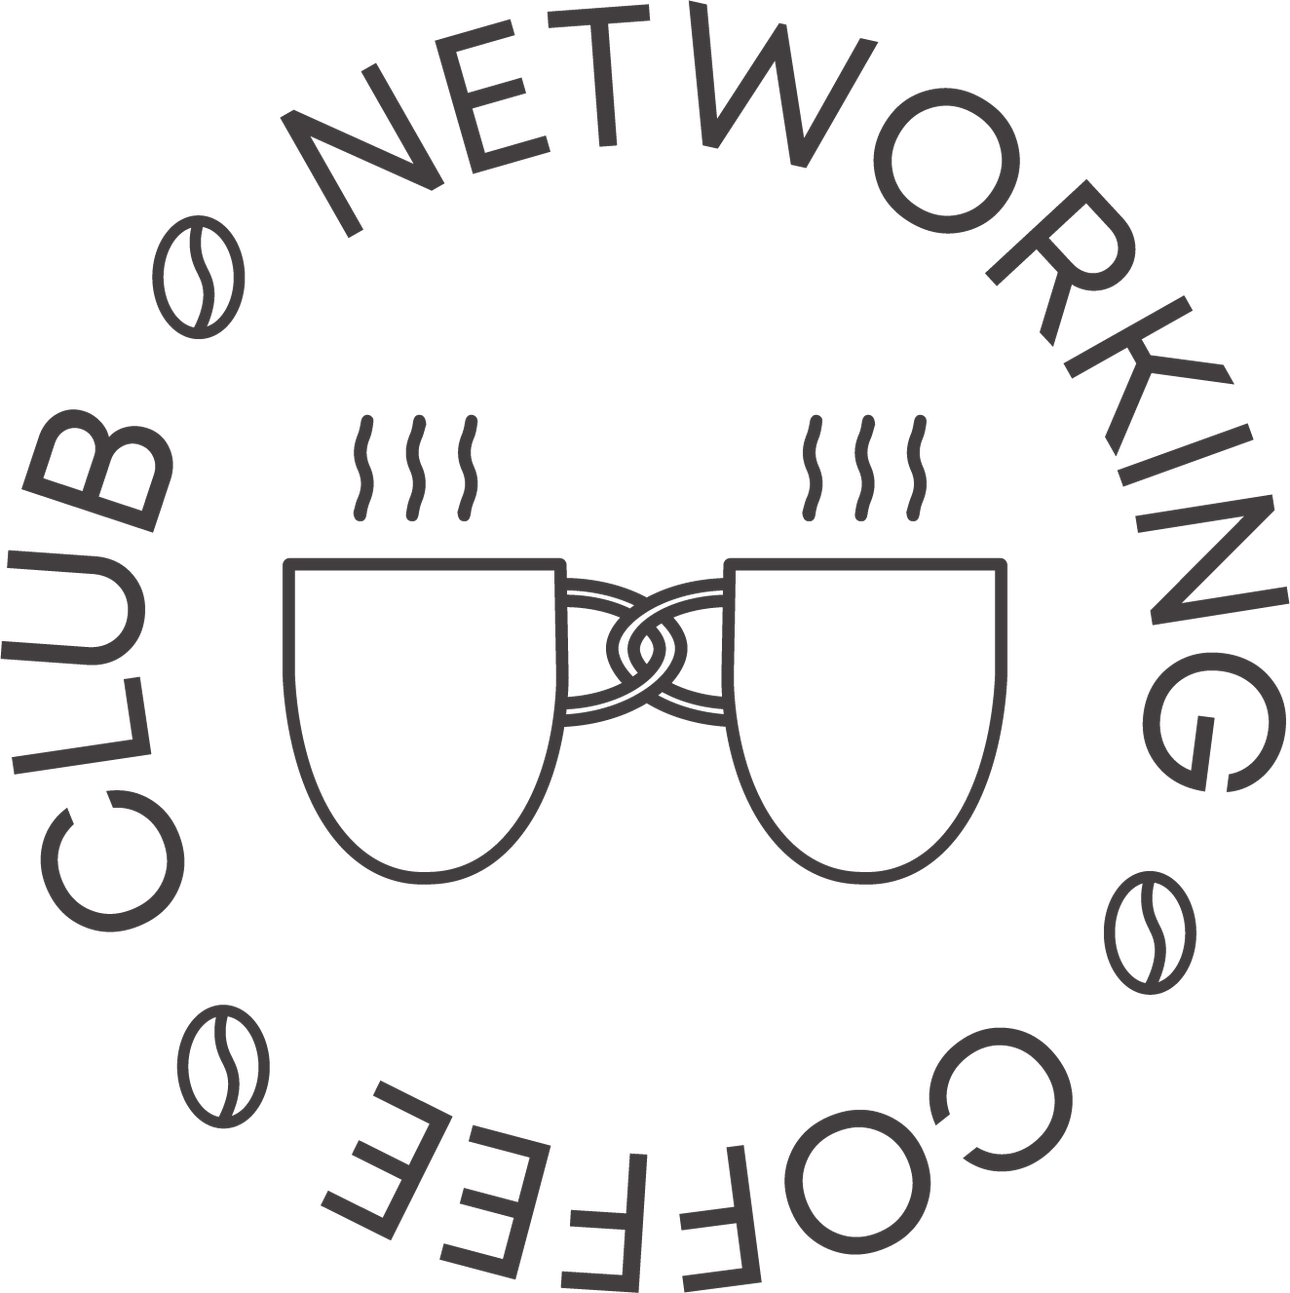 Networking Coffee Club logo